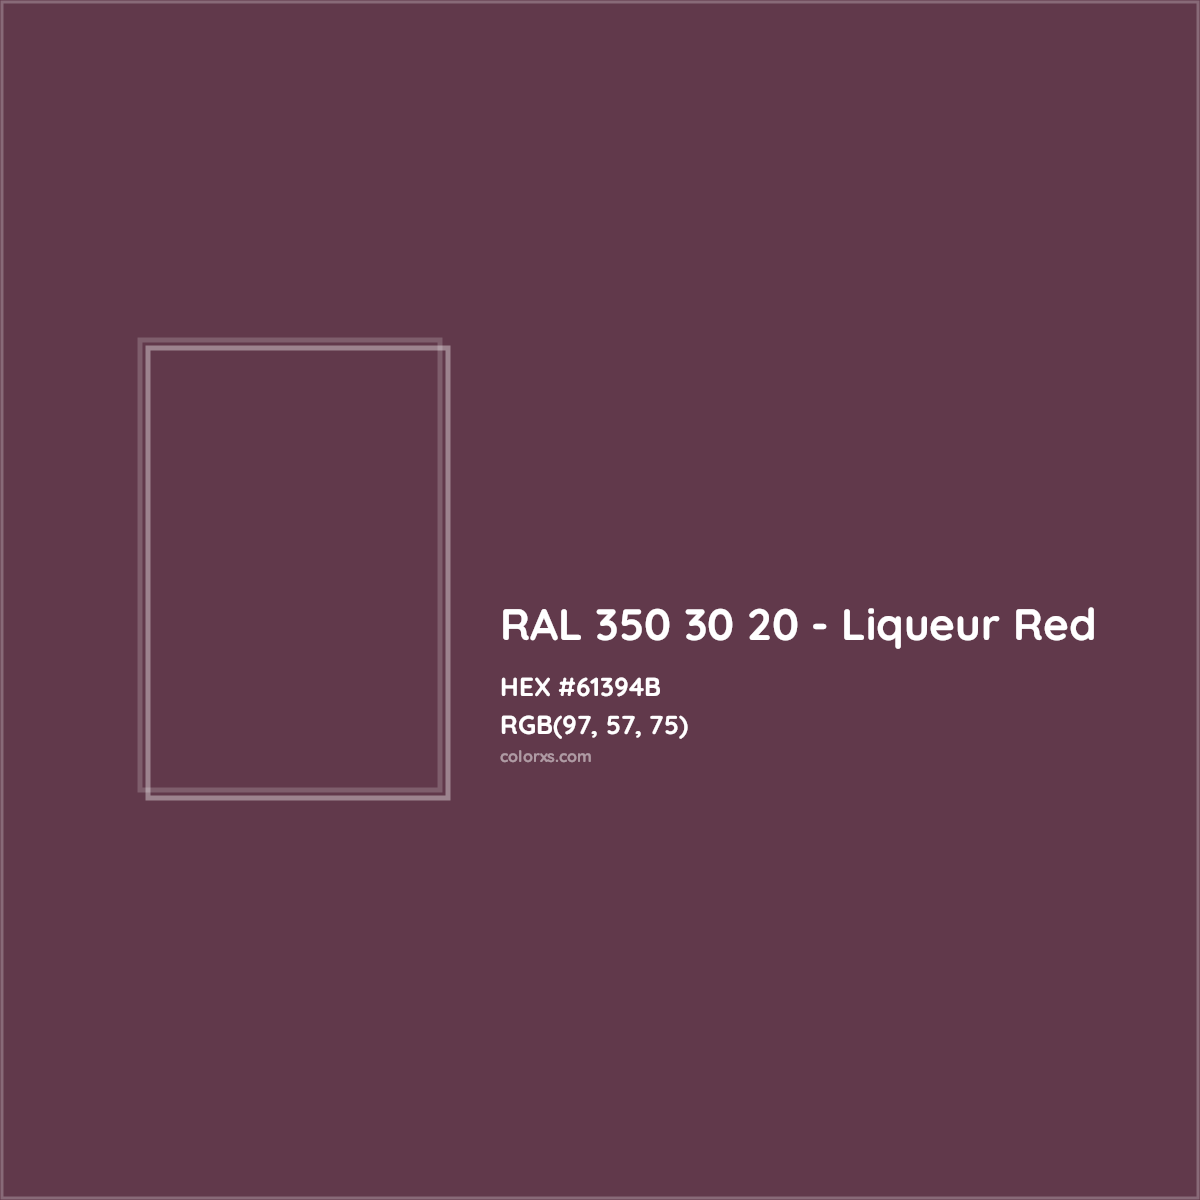 HEX #61394B RAL 350 30 20 - Liqueur Red CMS RAL Design - Color Code